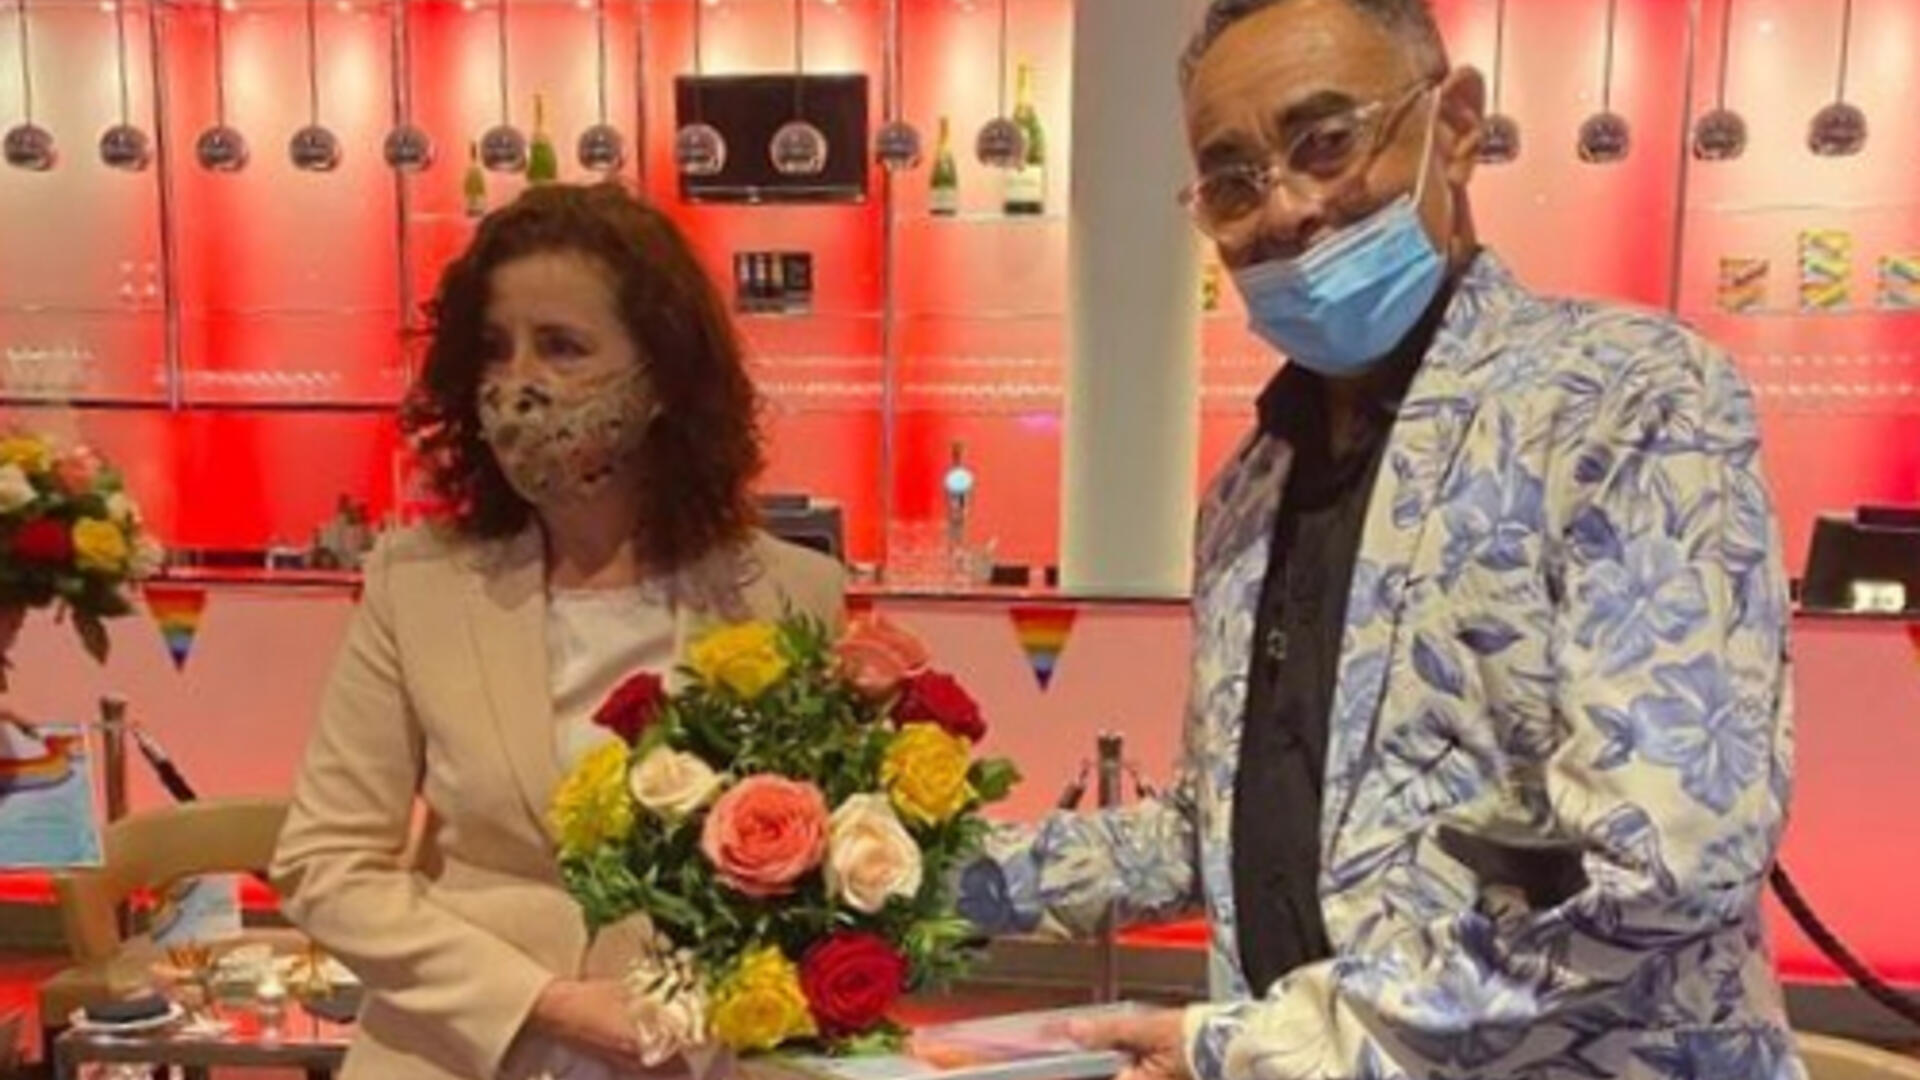 Ingrid van Engelshoven en Glenn Helberg allebei met mondkapje en bloemen